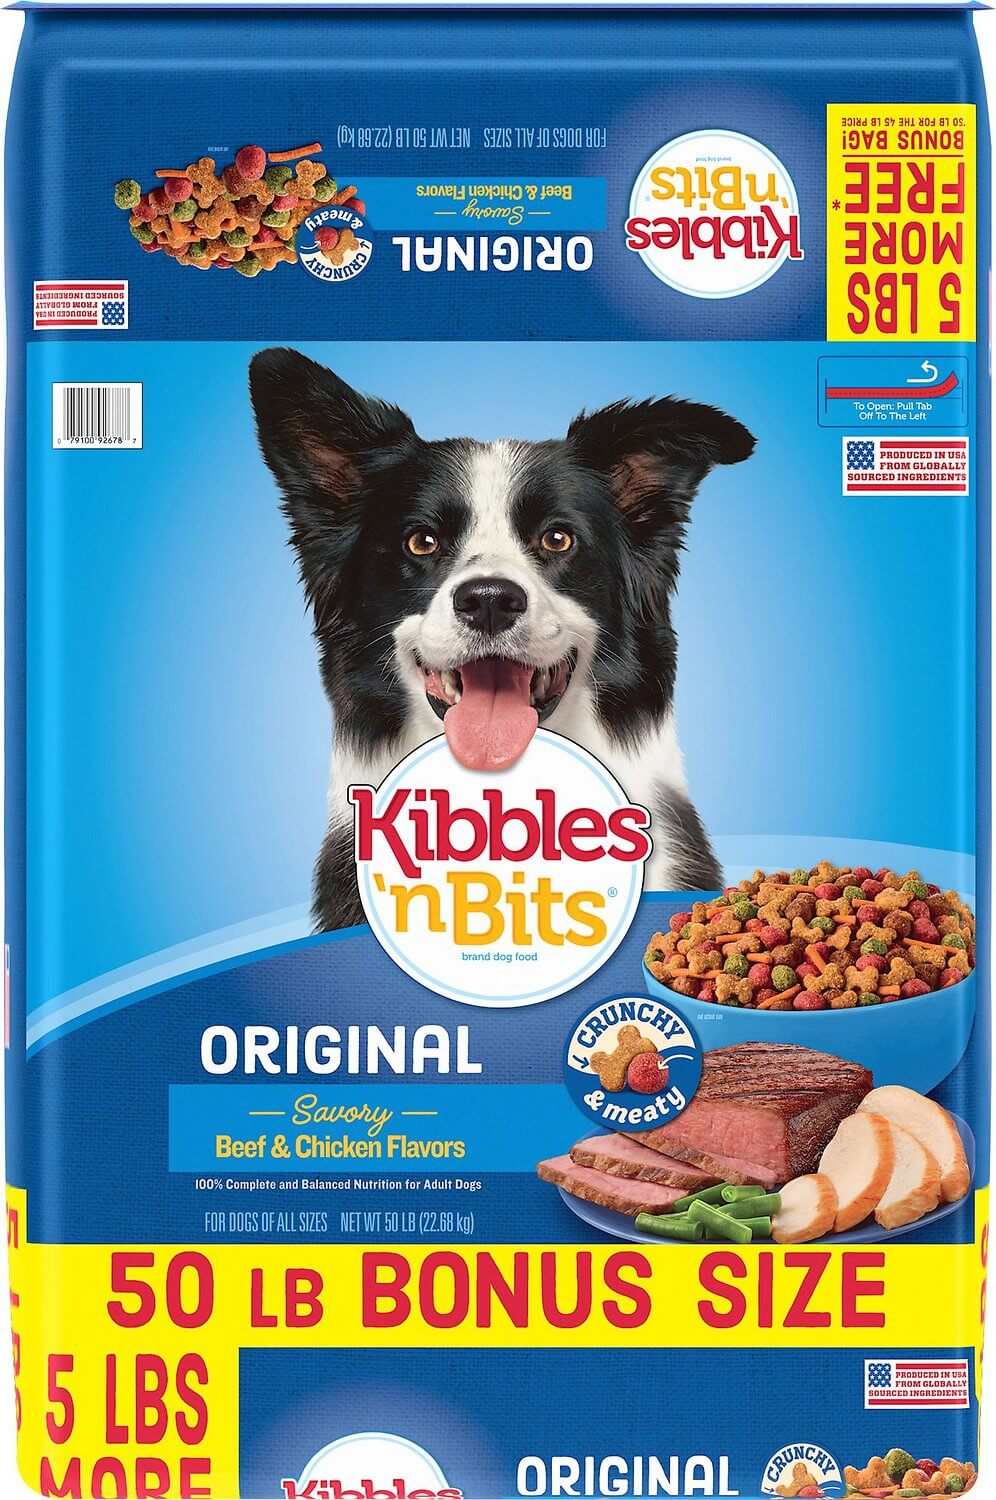 Kibbles 'n Bits Dog Food | Review 